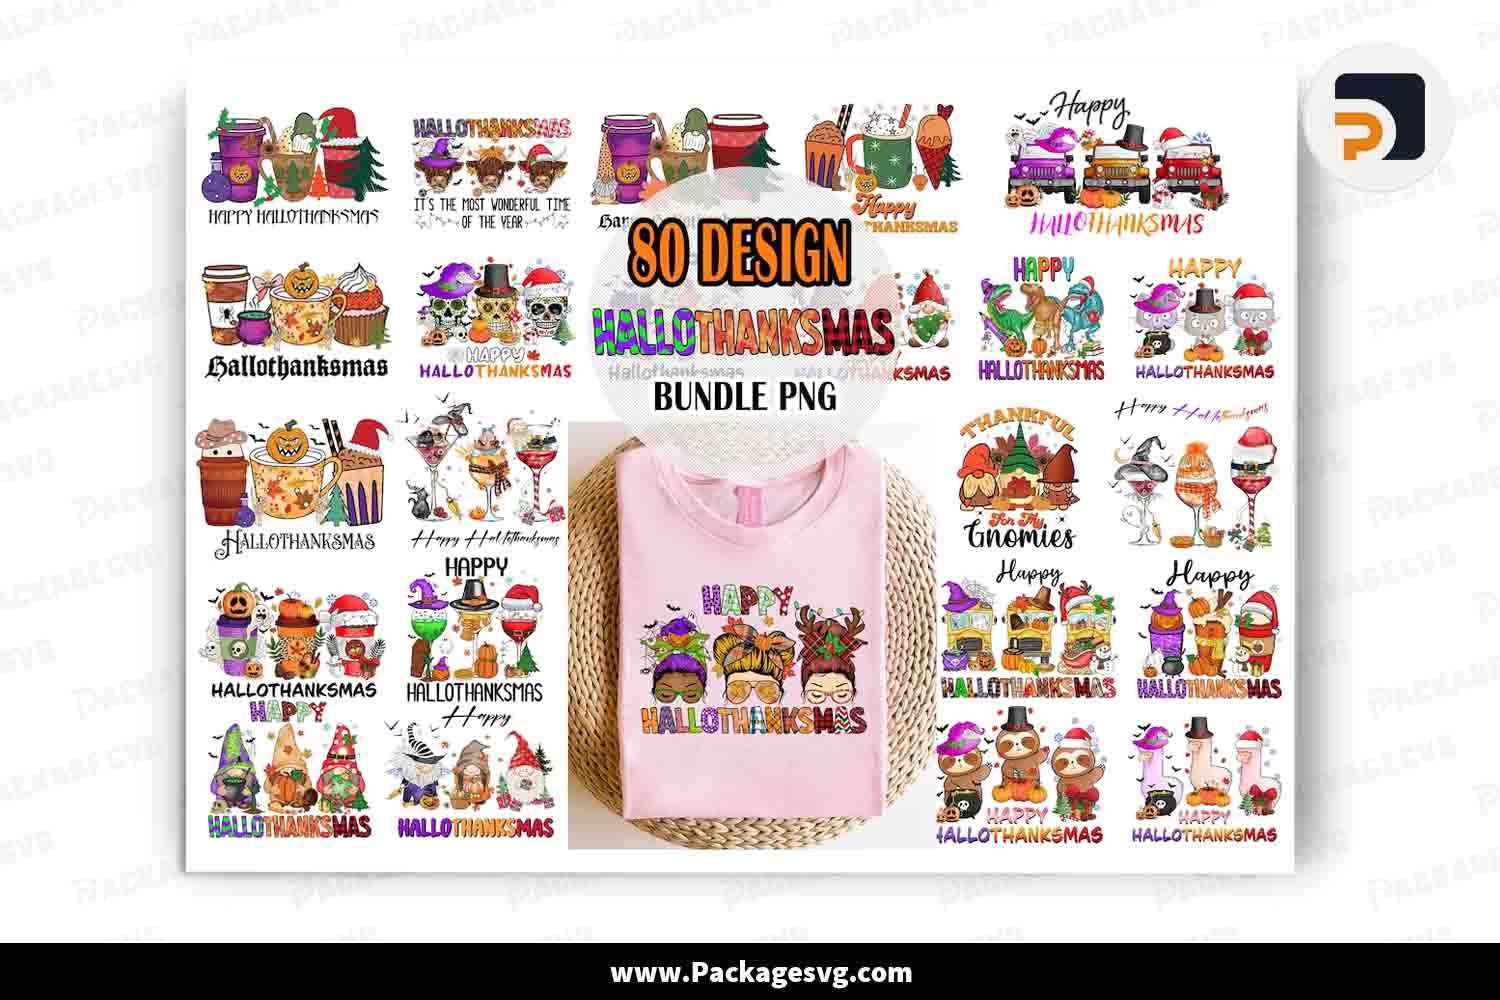 Happy Hallothanksmas Png Bundle, 80 Happy Holiday Designs LNA49UMJ